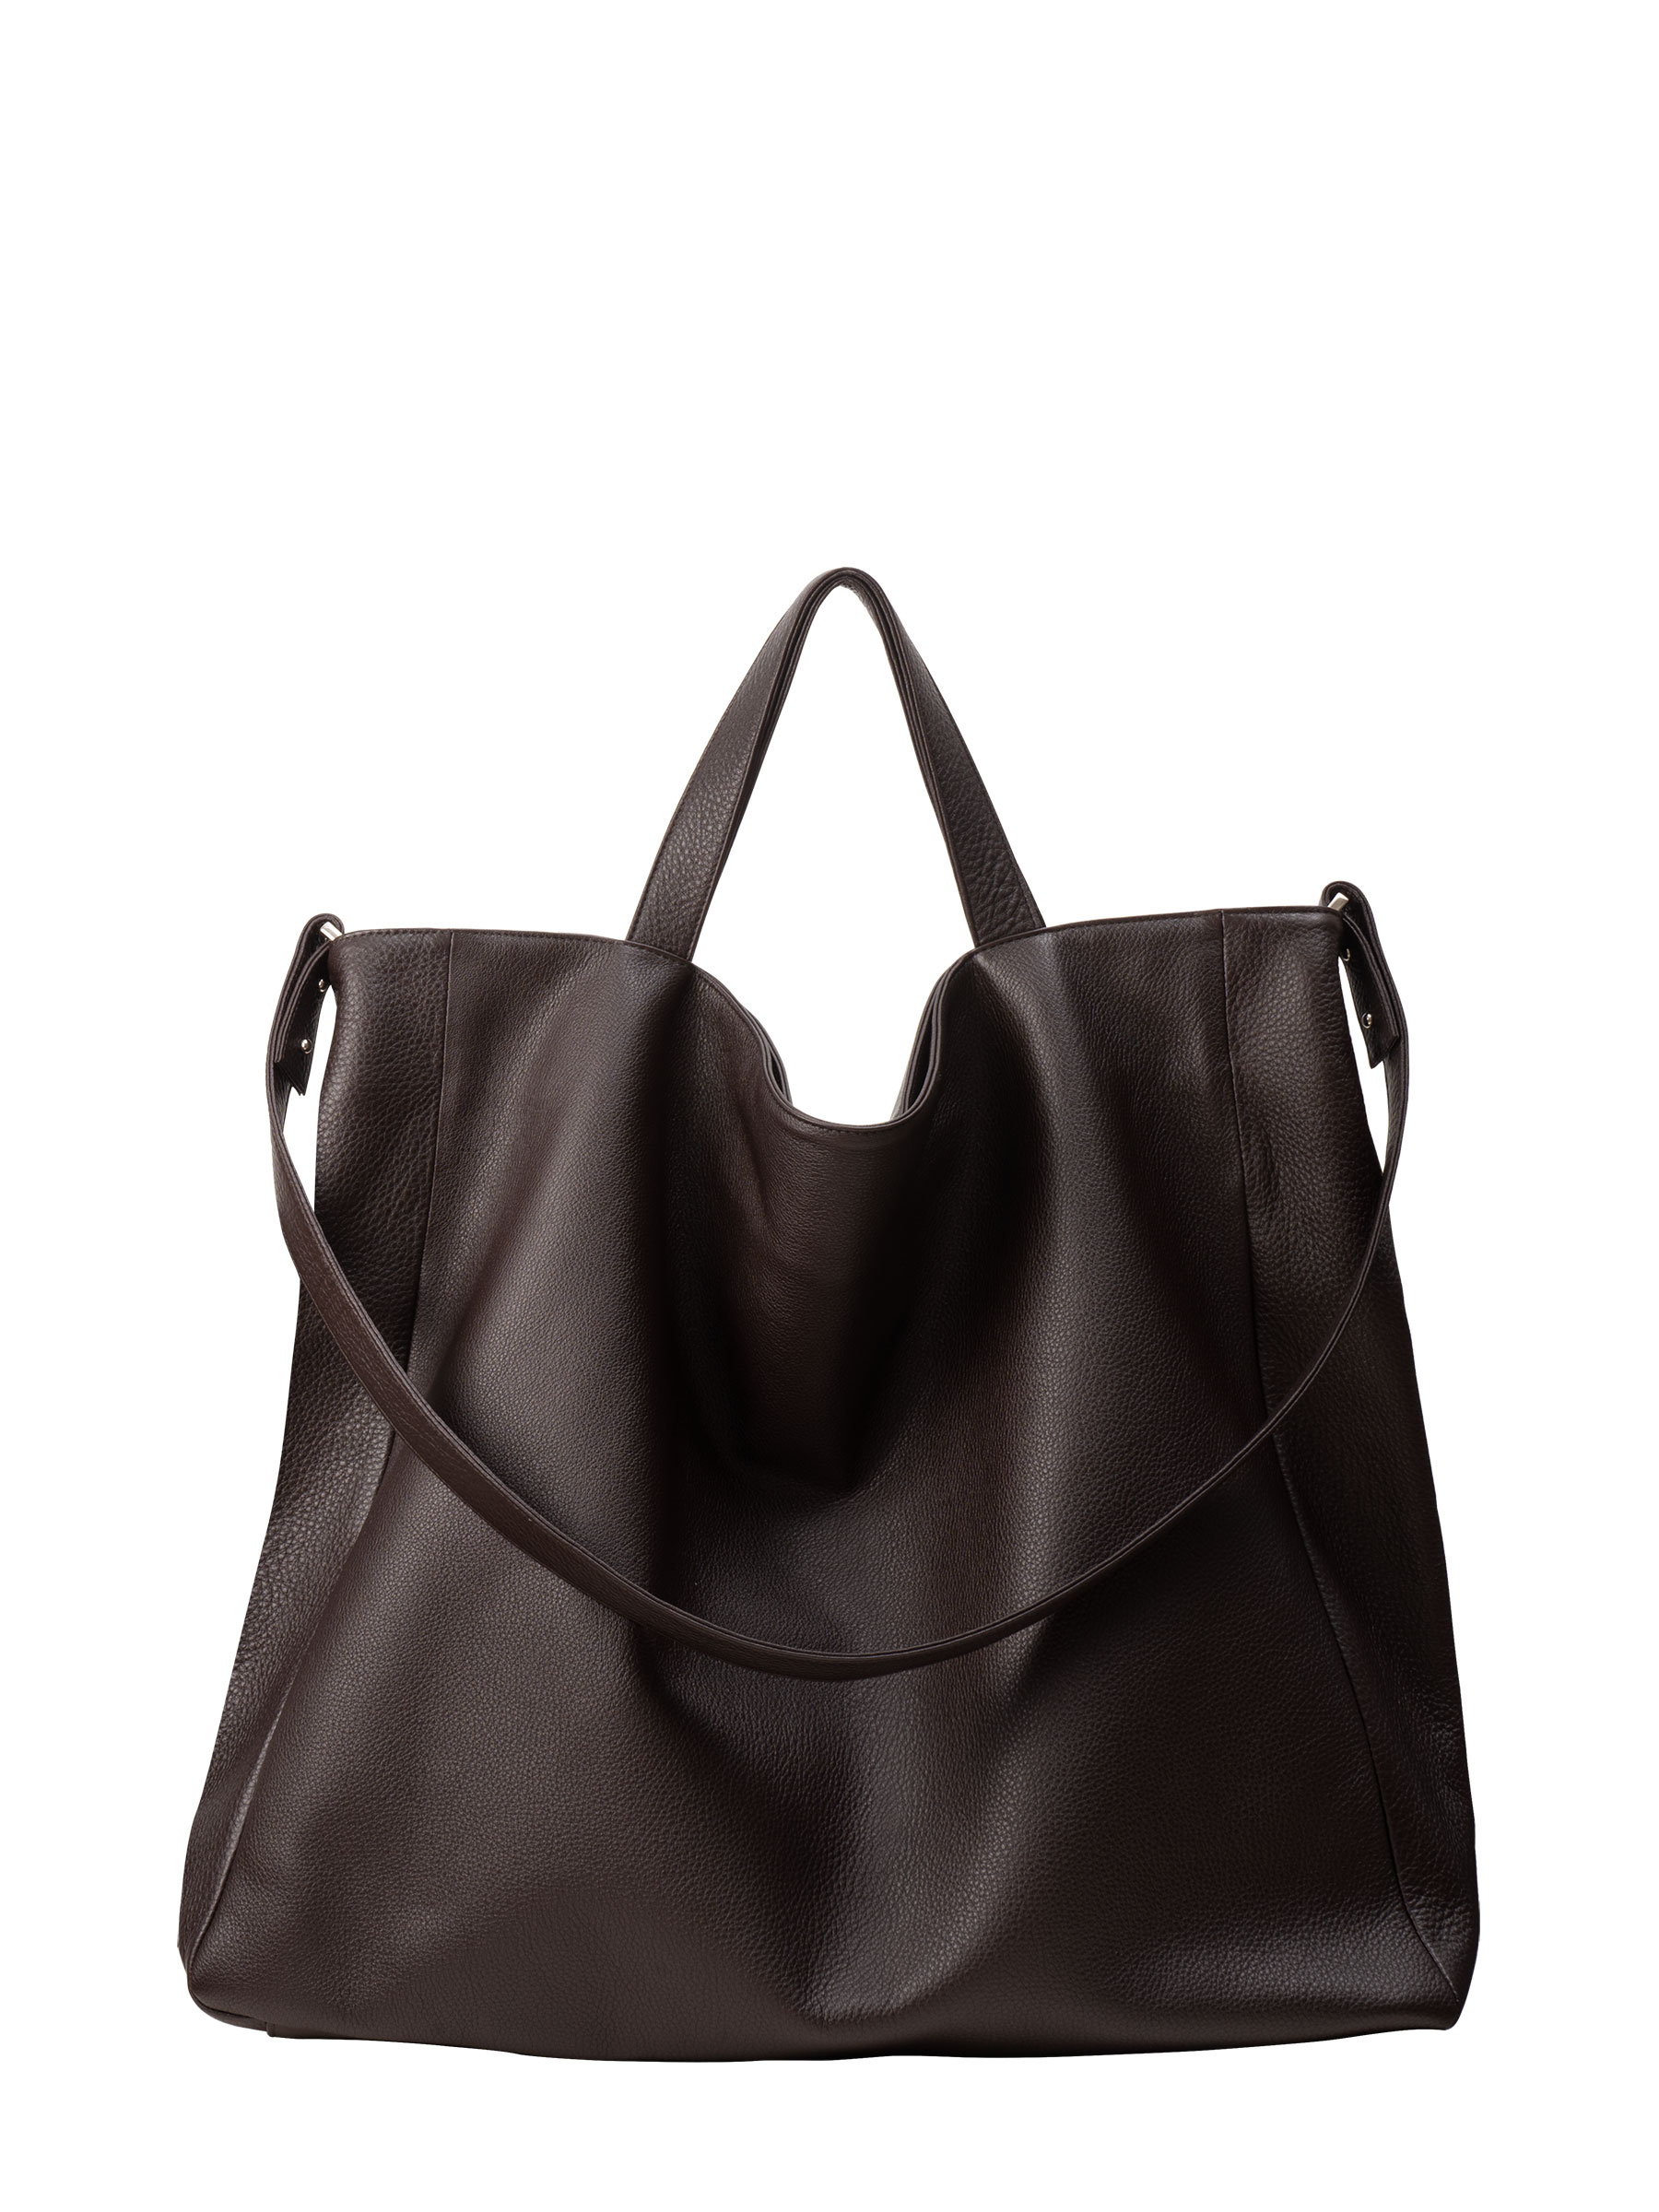 FABER TWO shoulder bag in dark brown calfskin leather | TSATSAS